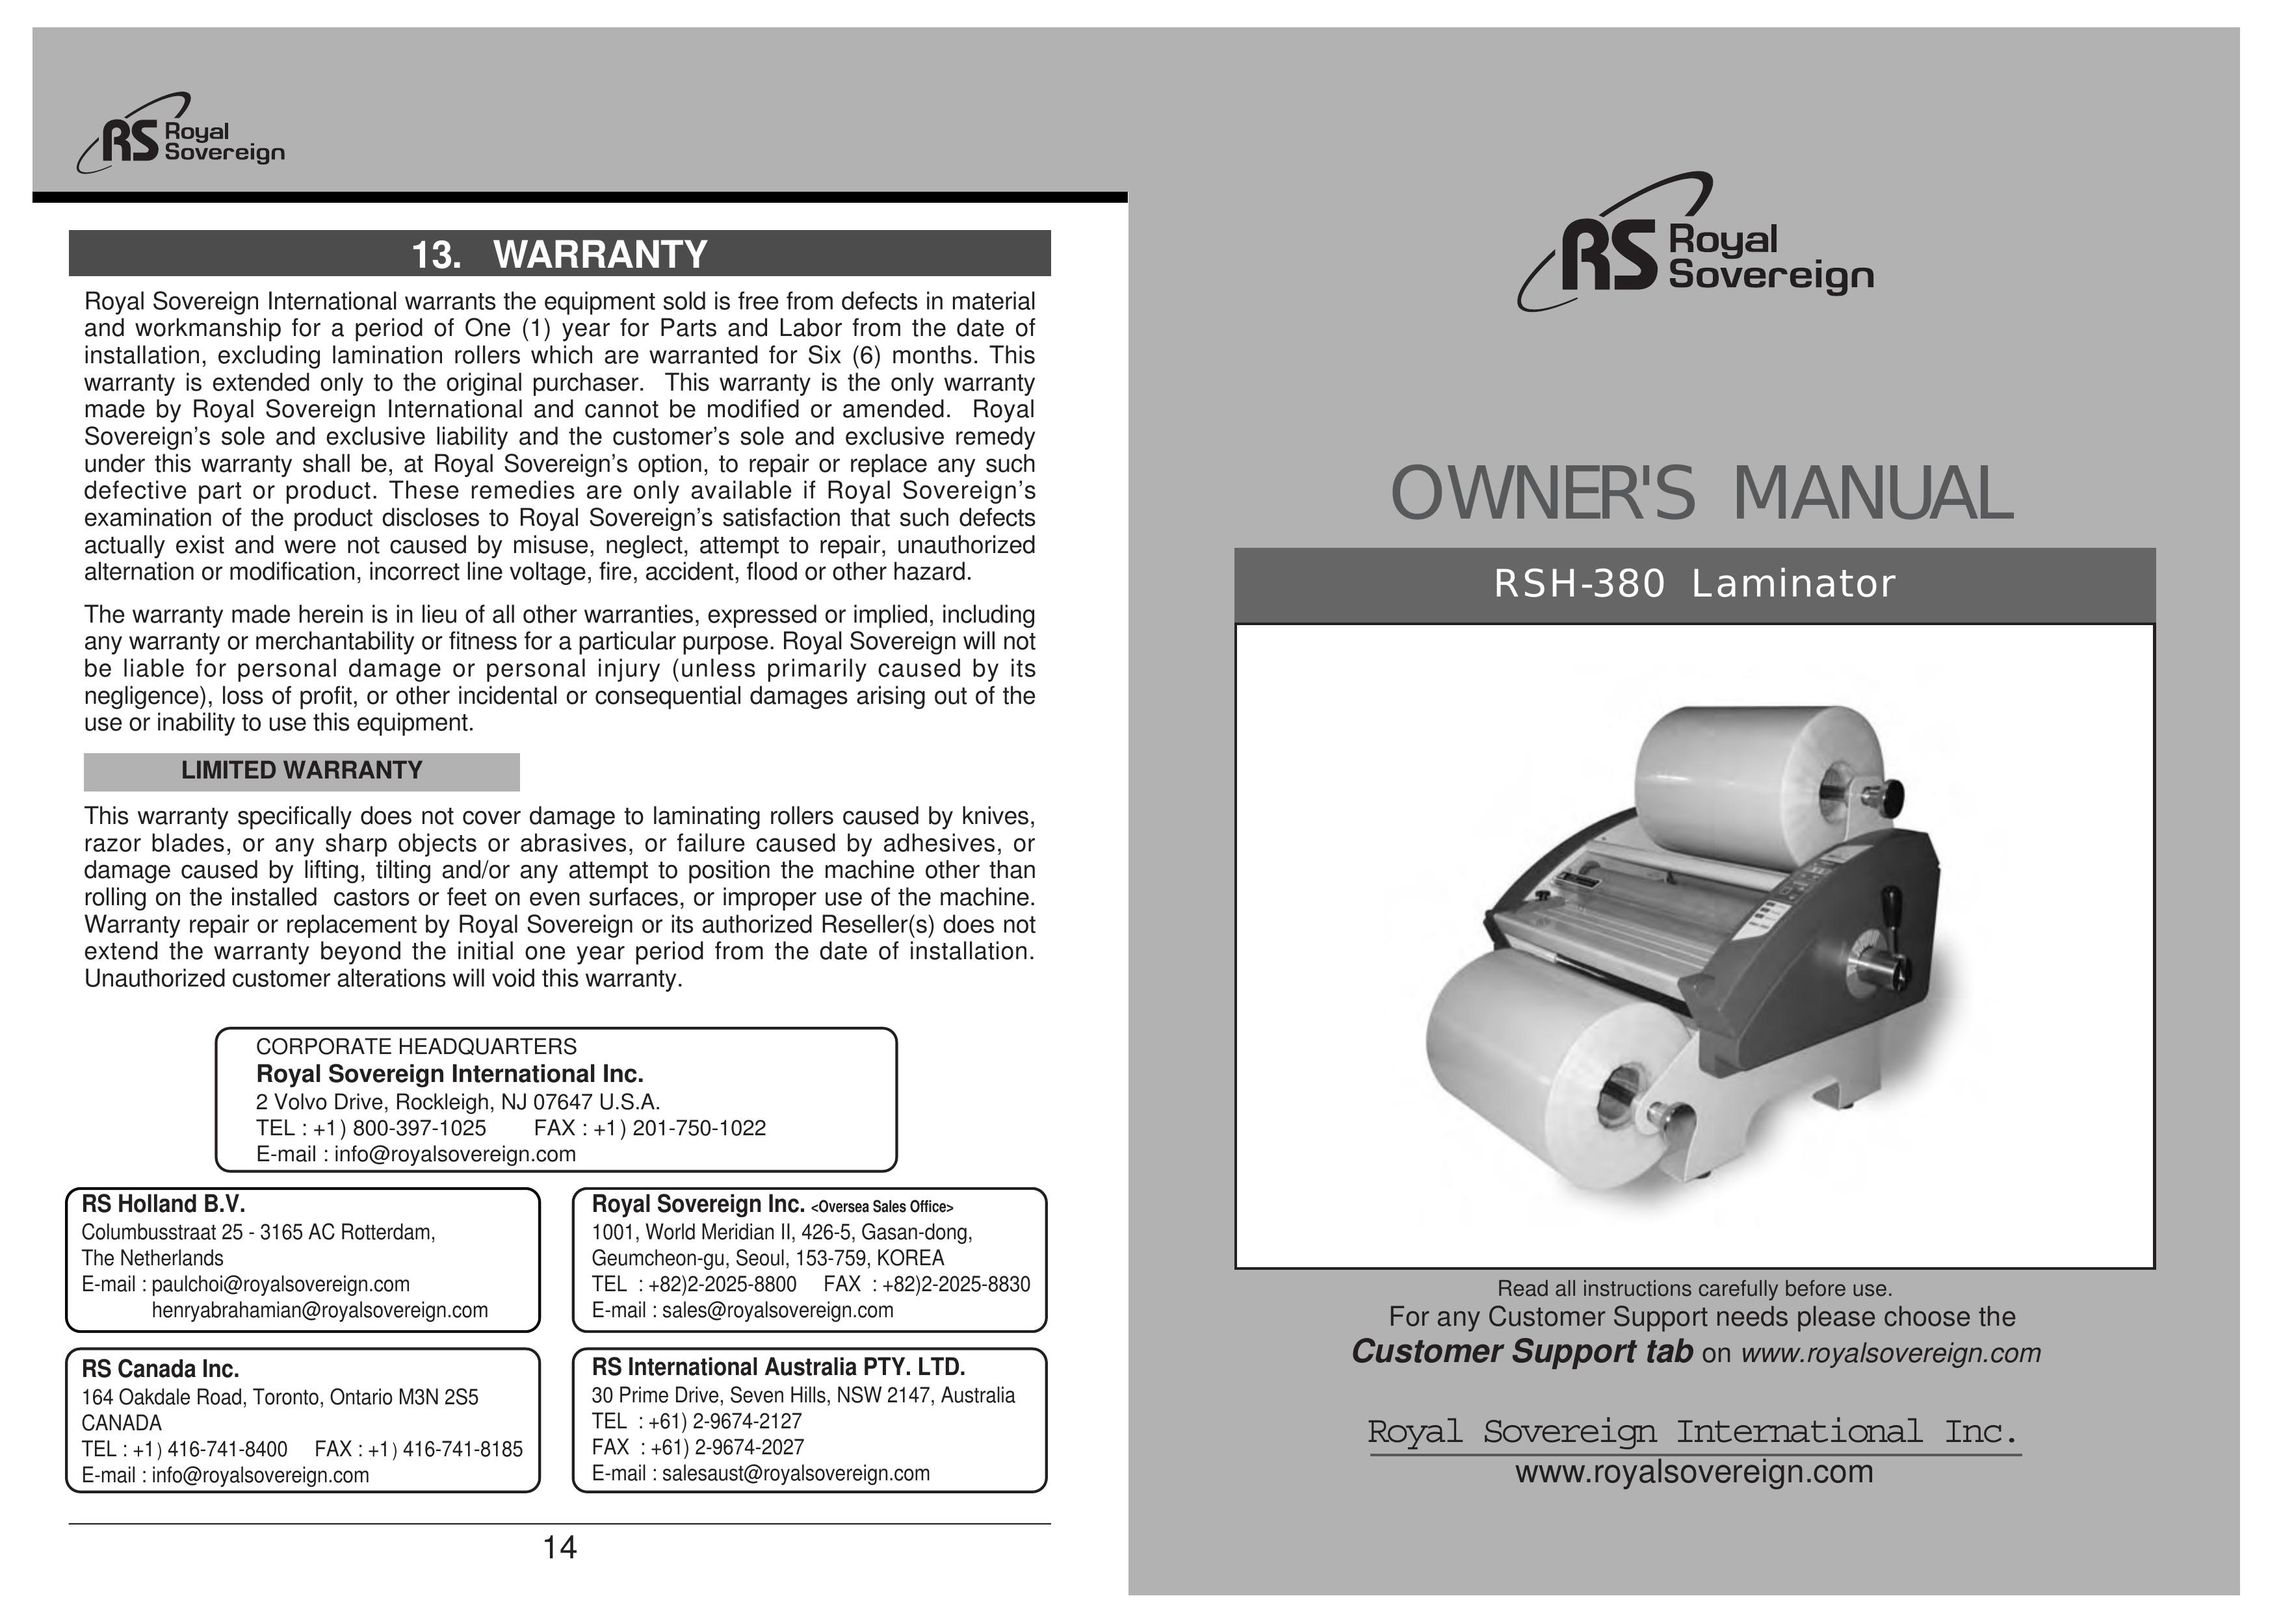 Royal Sovereign RSH-380 Laminator User Manual